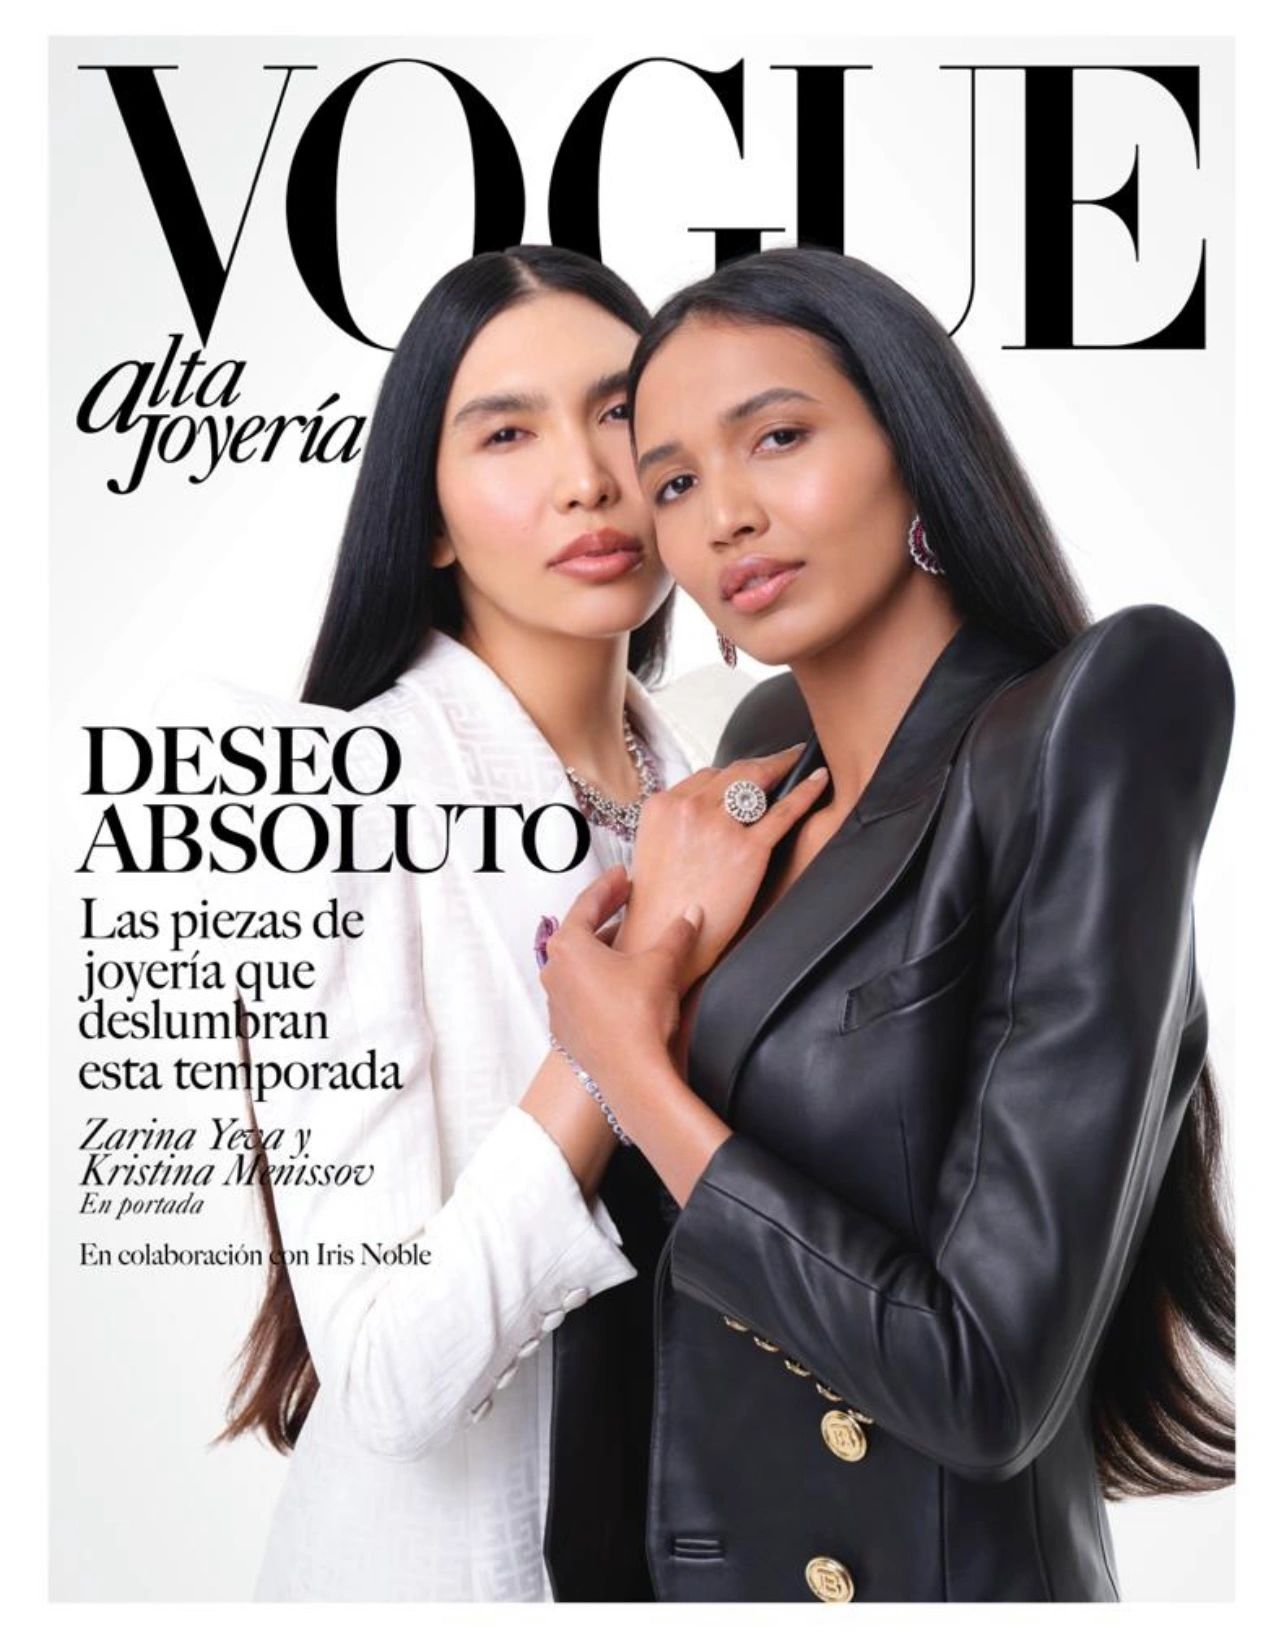 Kristina Menissov and Zarina Yeva on the cover of VOGUE Mexico